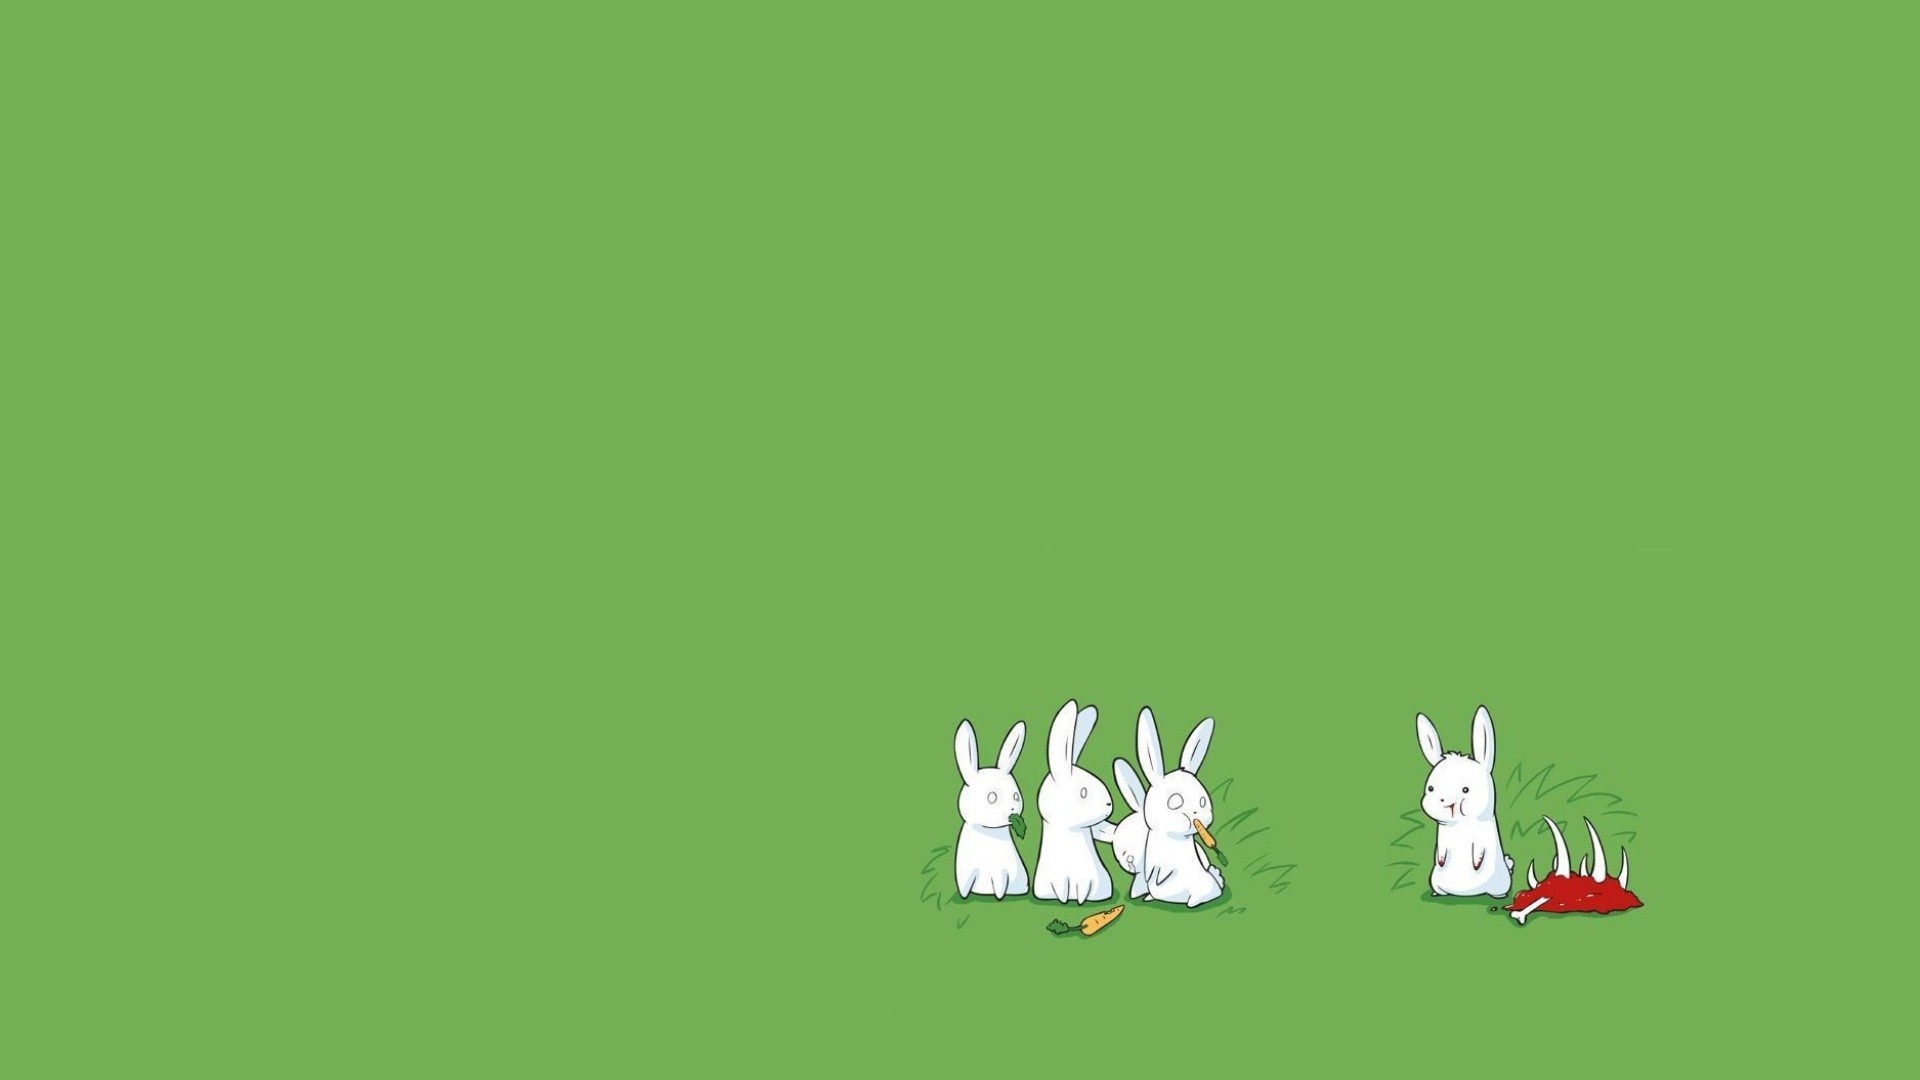 General 1920x1080 humor rabbits minimalism green green background meat dark humor carrots